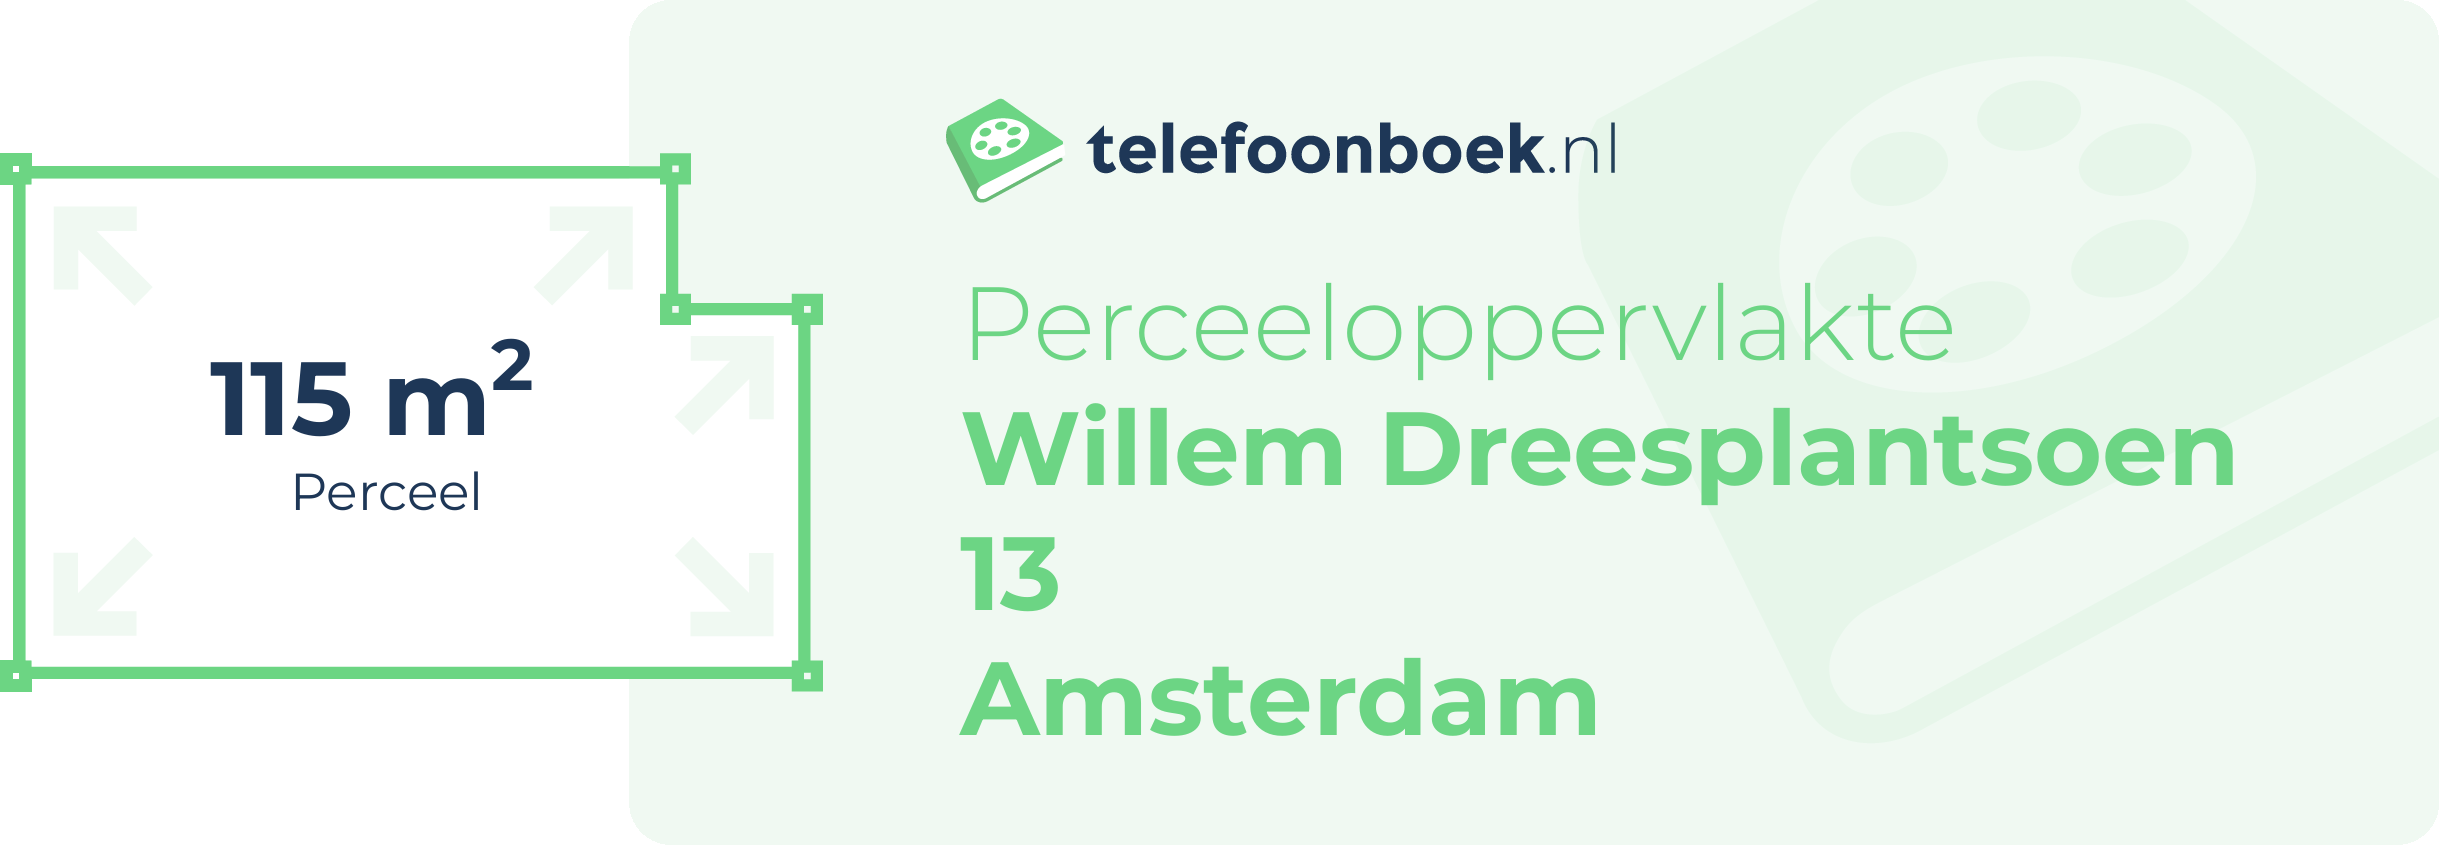 Perceeloppervlakte Willem Dreesplantsoen 13 Amsterdam